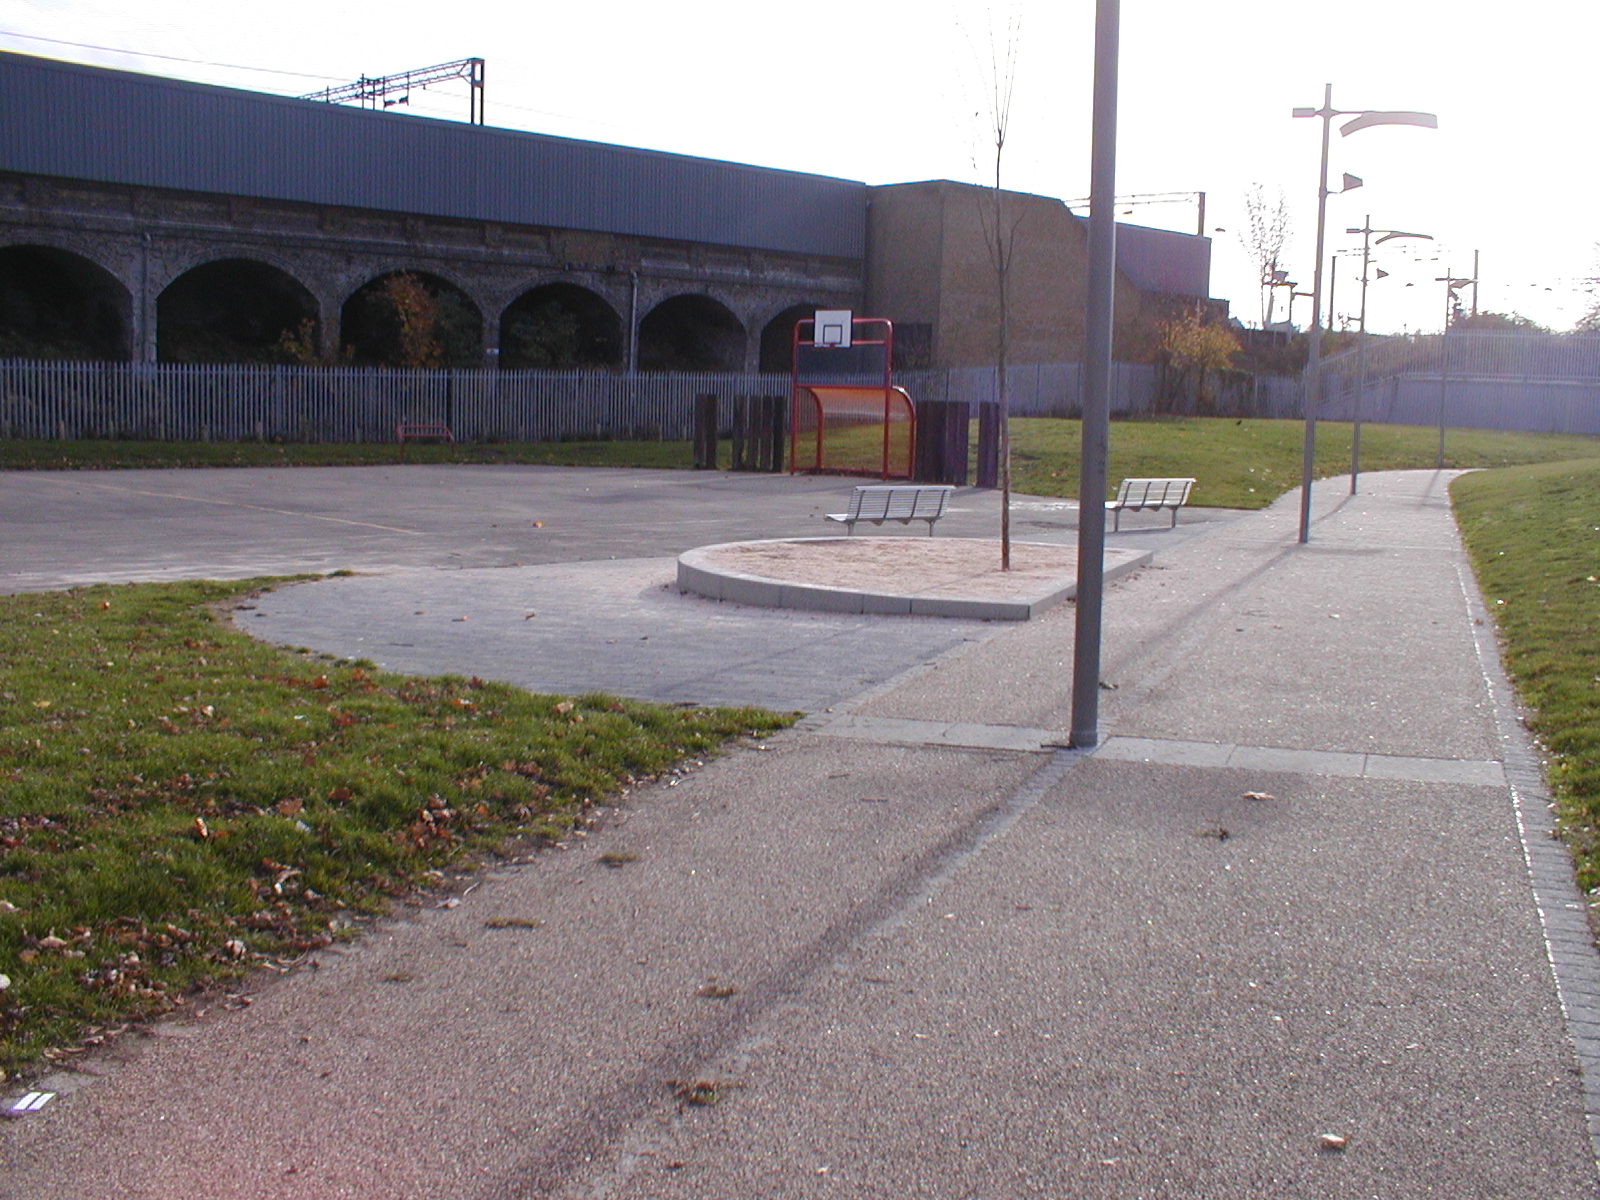 Main path and ball court, November 2003